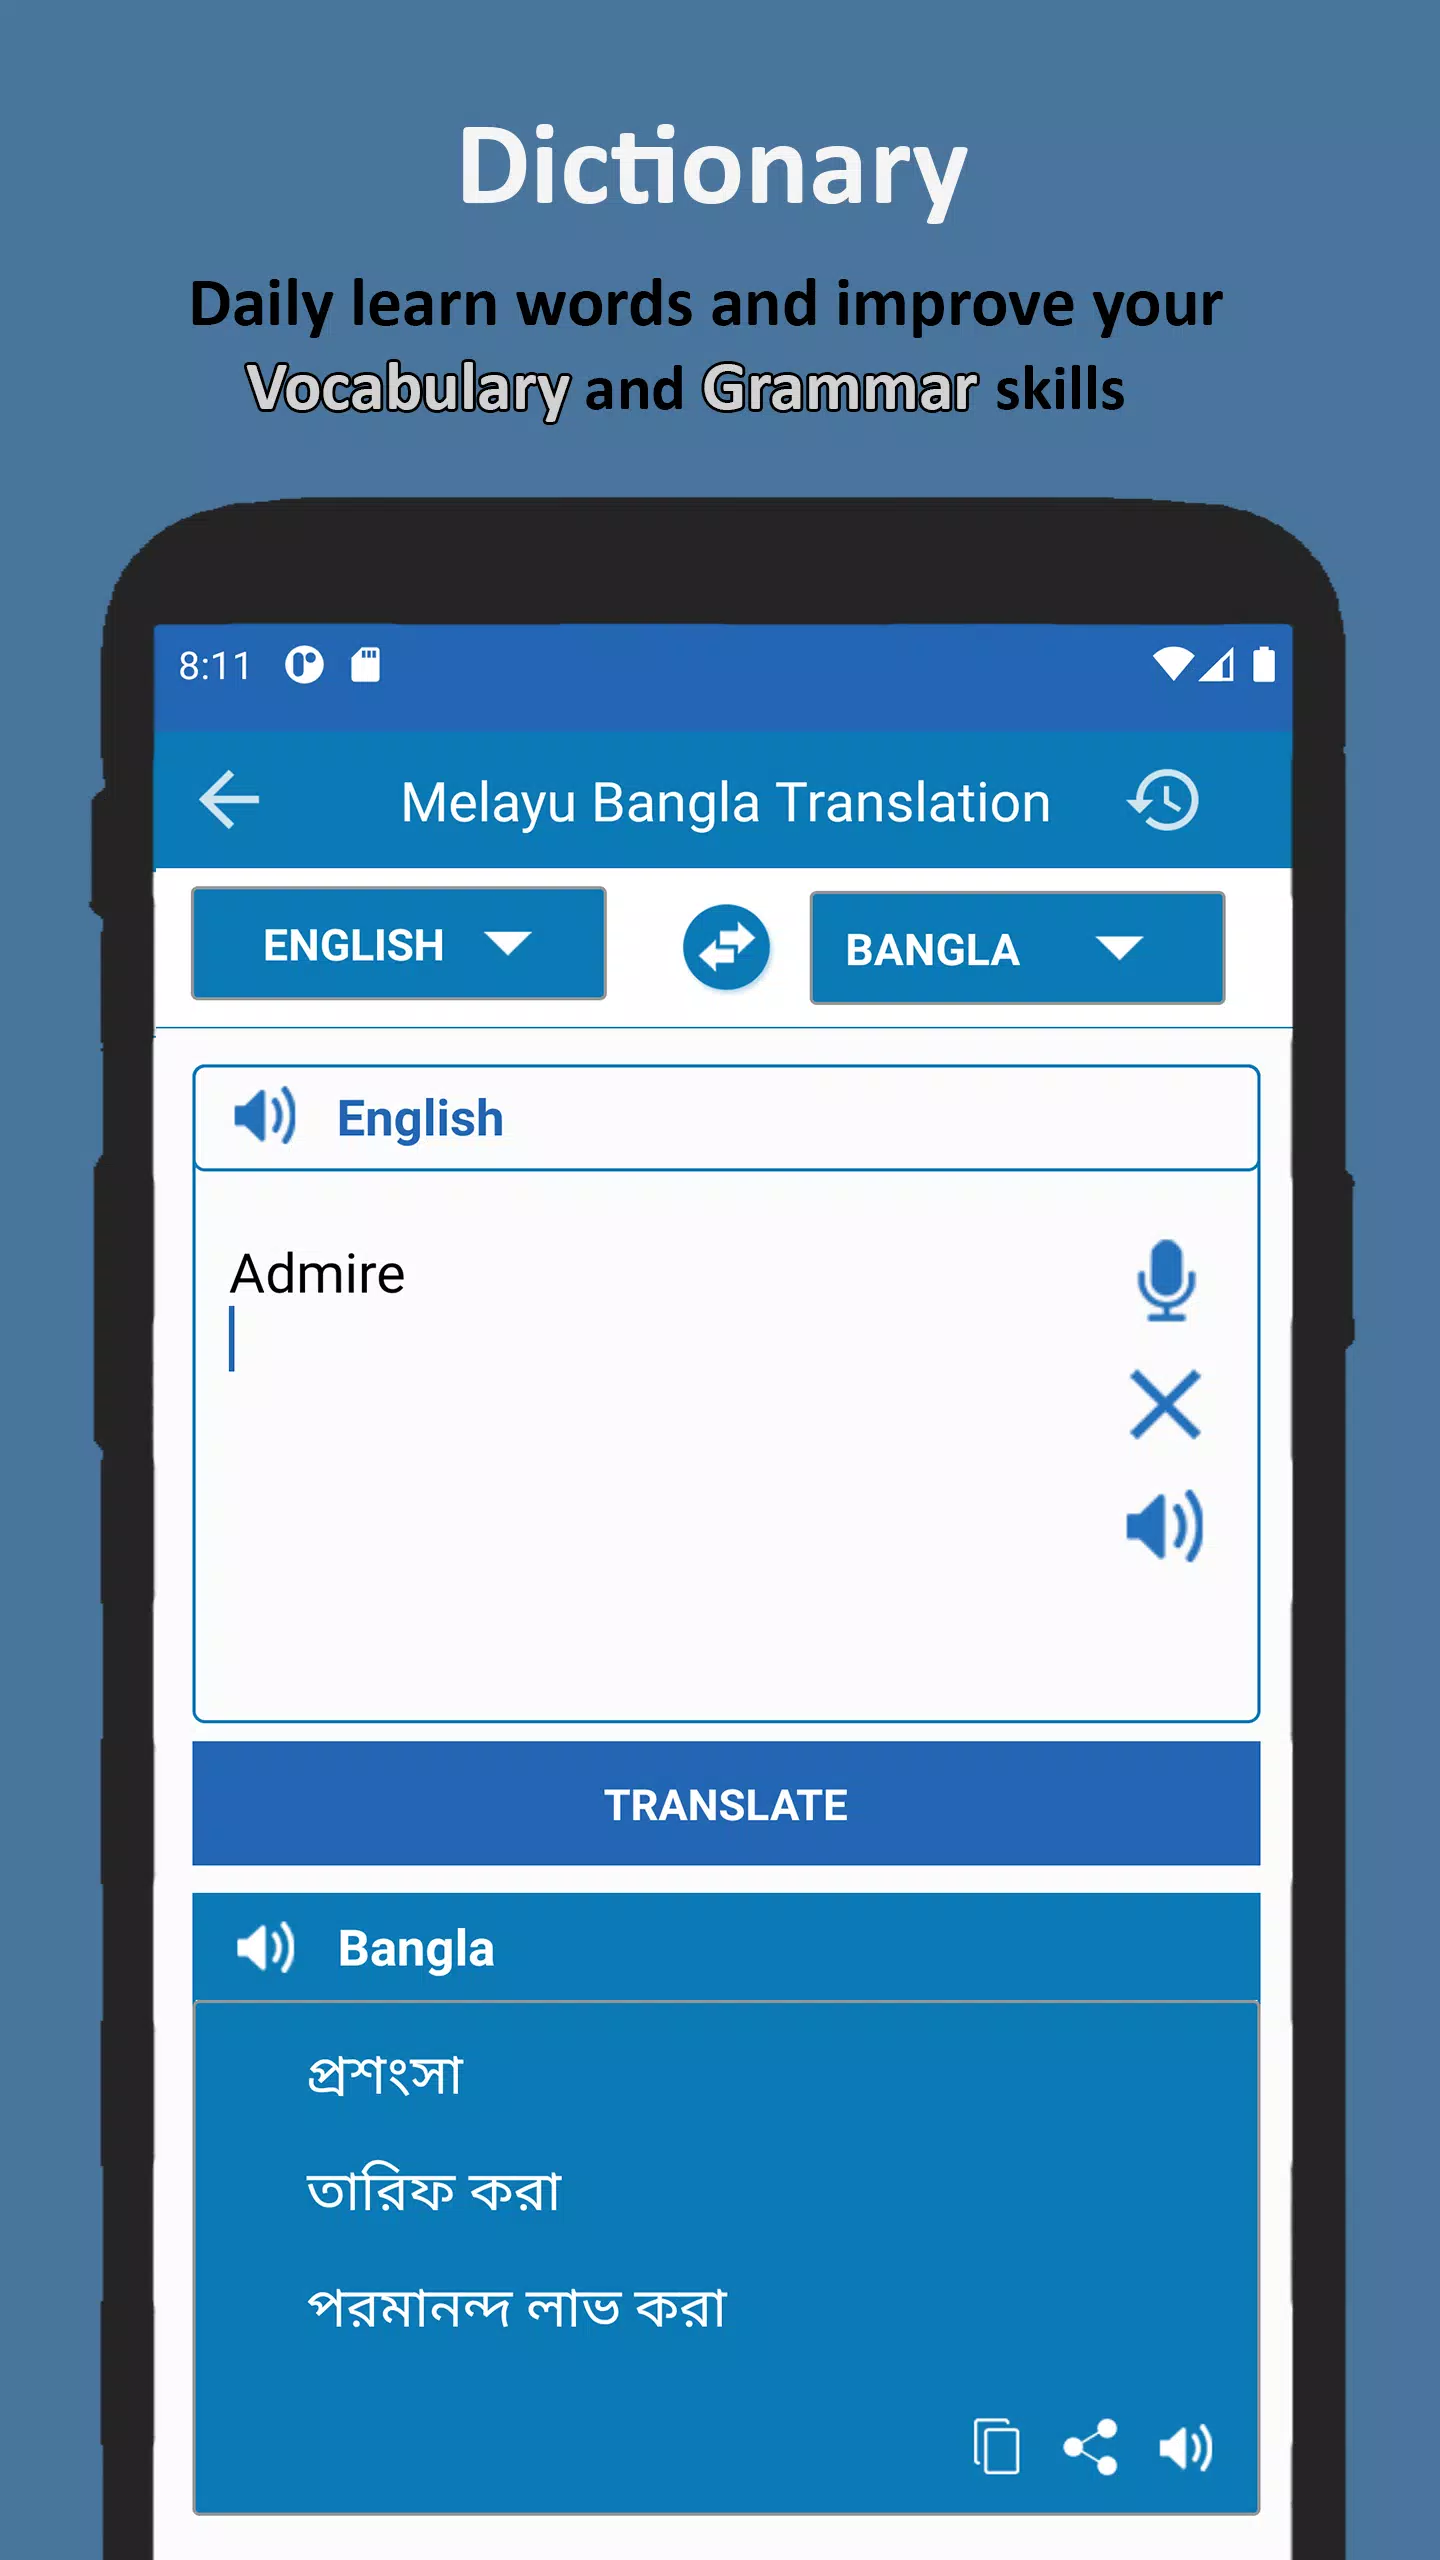 Translate malay to english with correct grammar